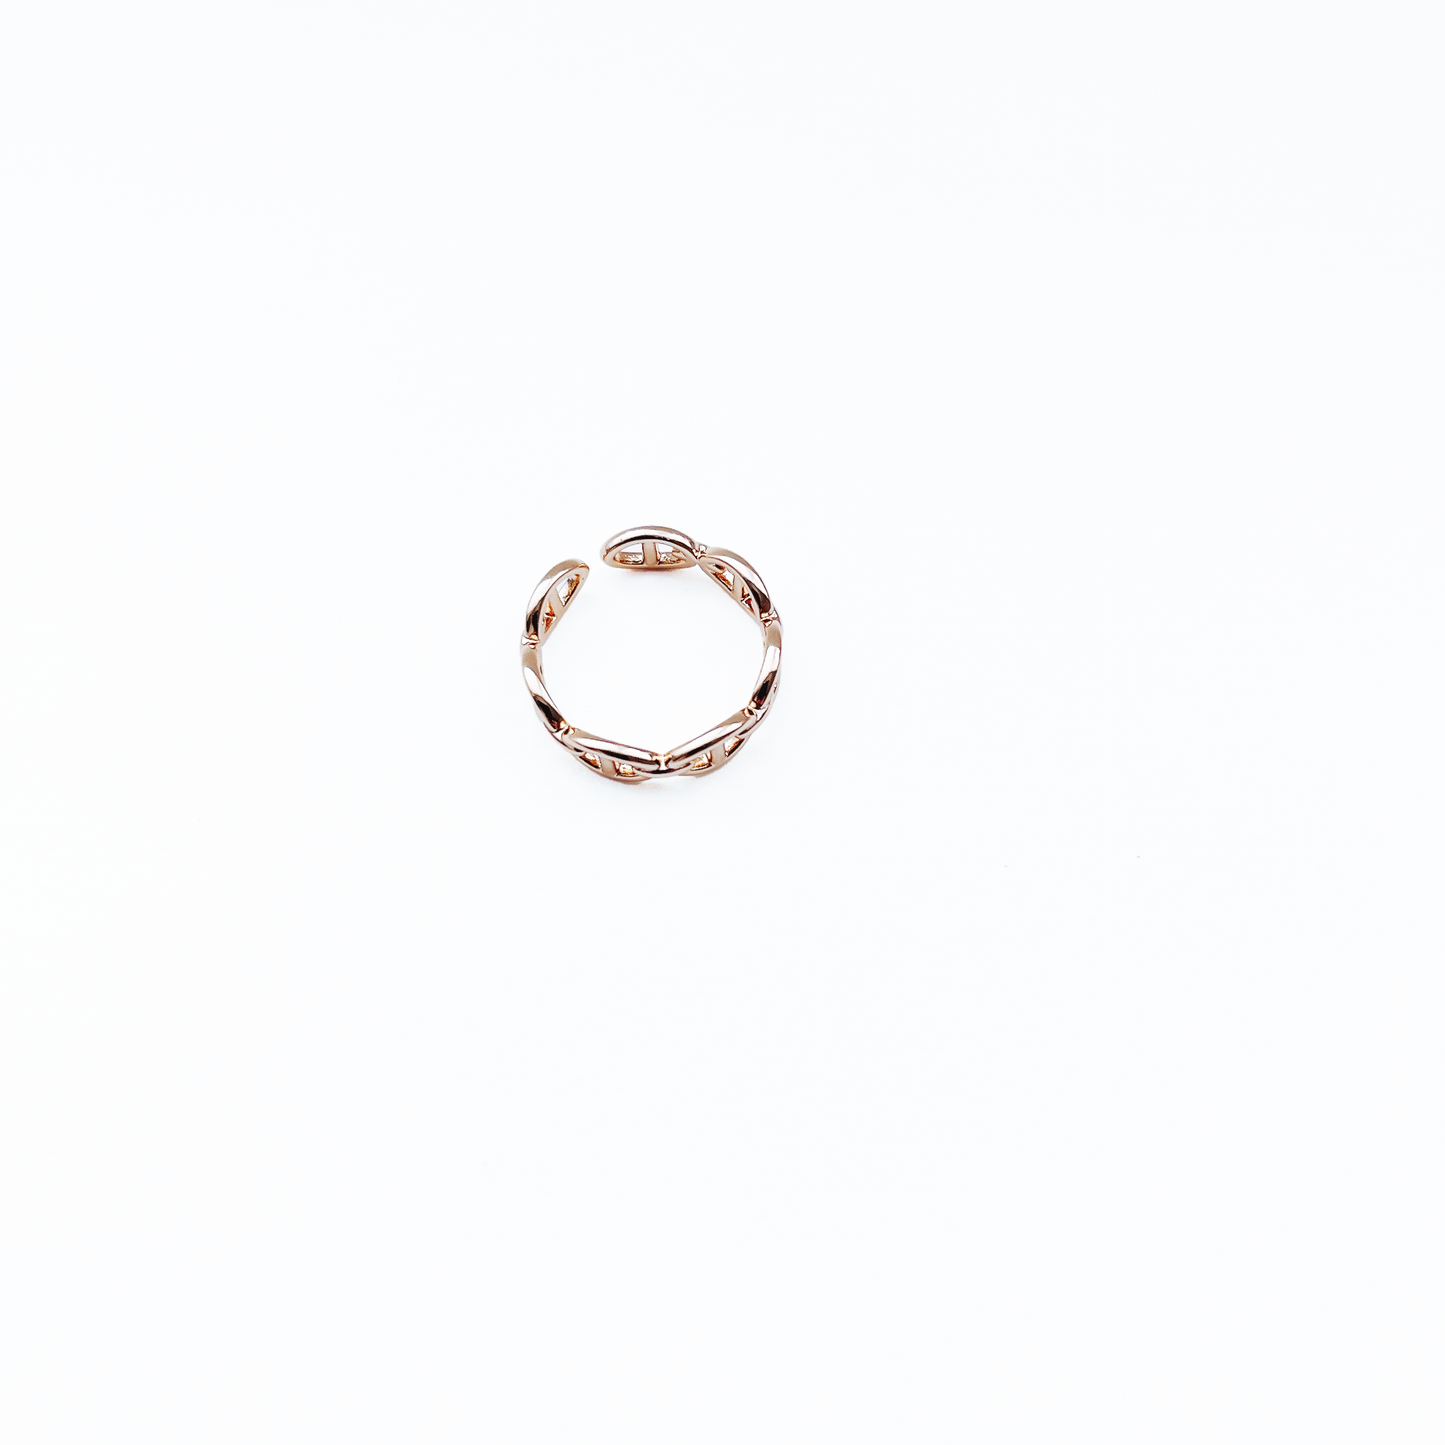 Adjustable pink gold sculpture ring inspired by Hermes Chaîne d'ancre Enchaînée, exuding elegance and luxury.